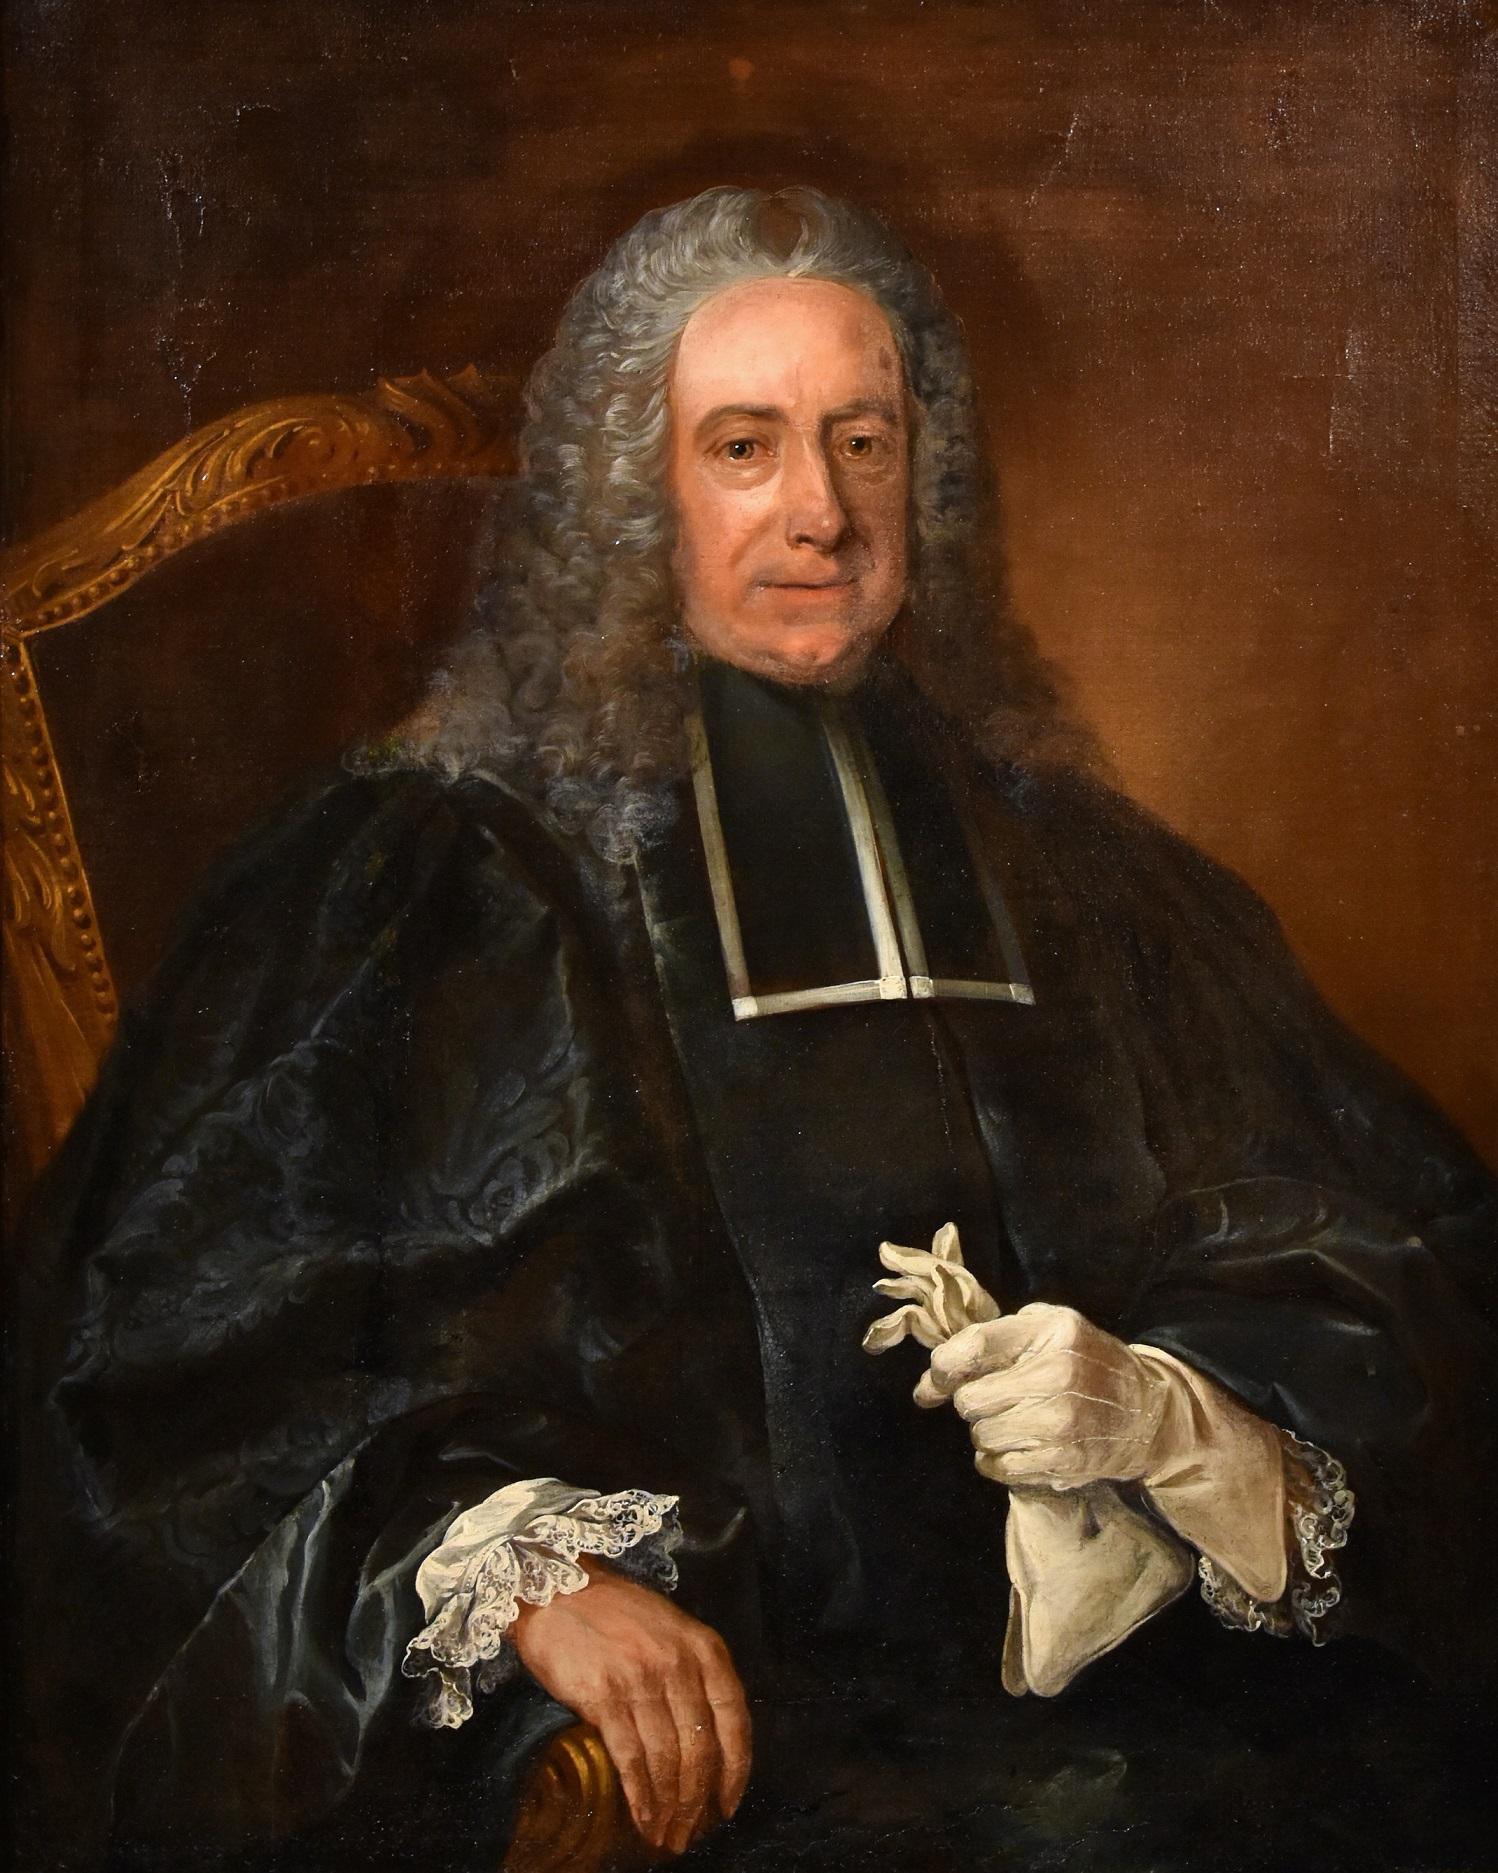 18th century lawyer